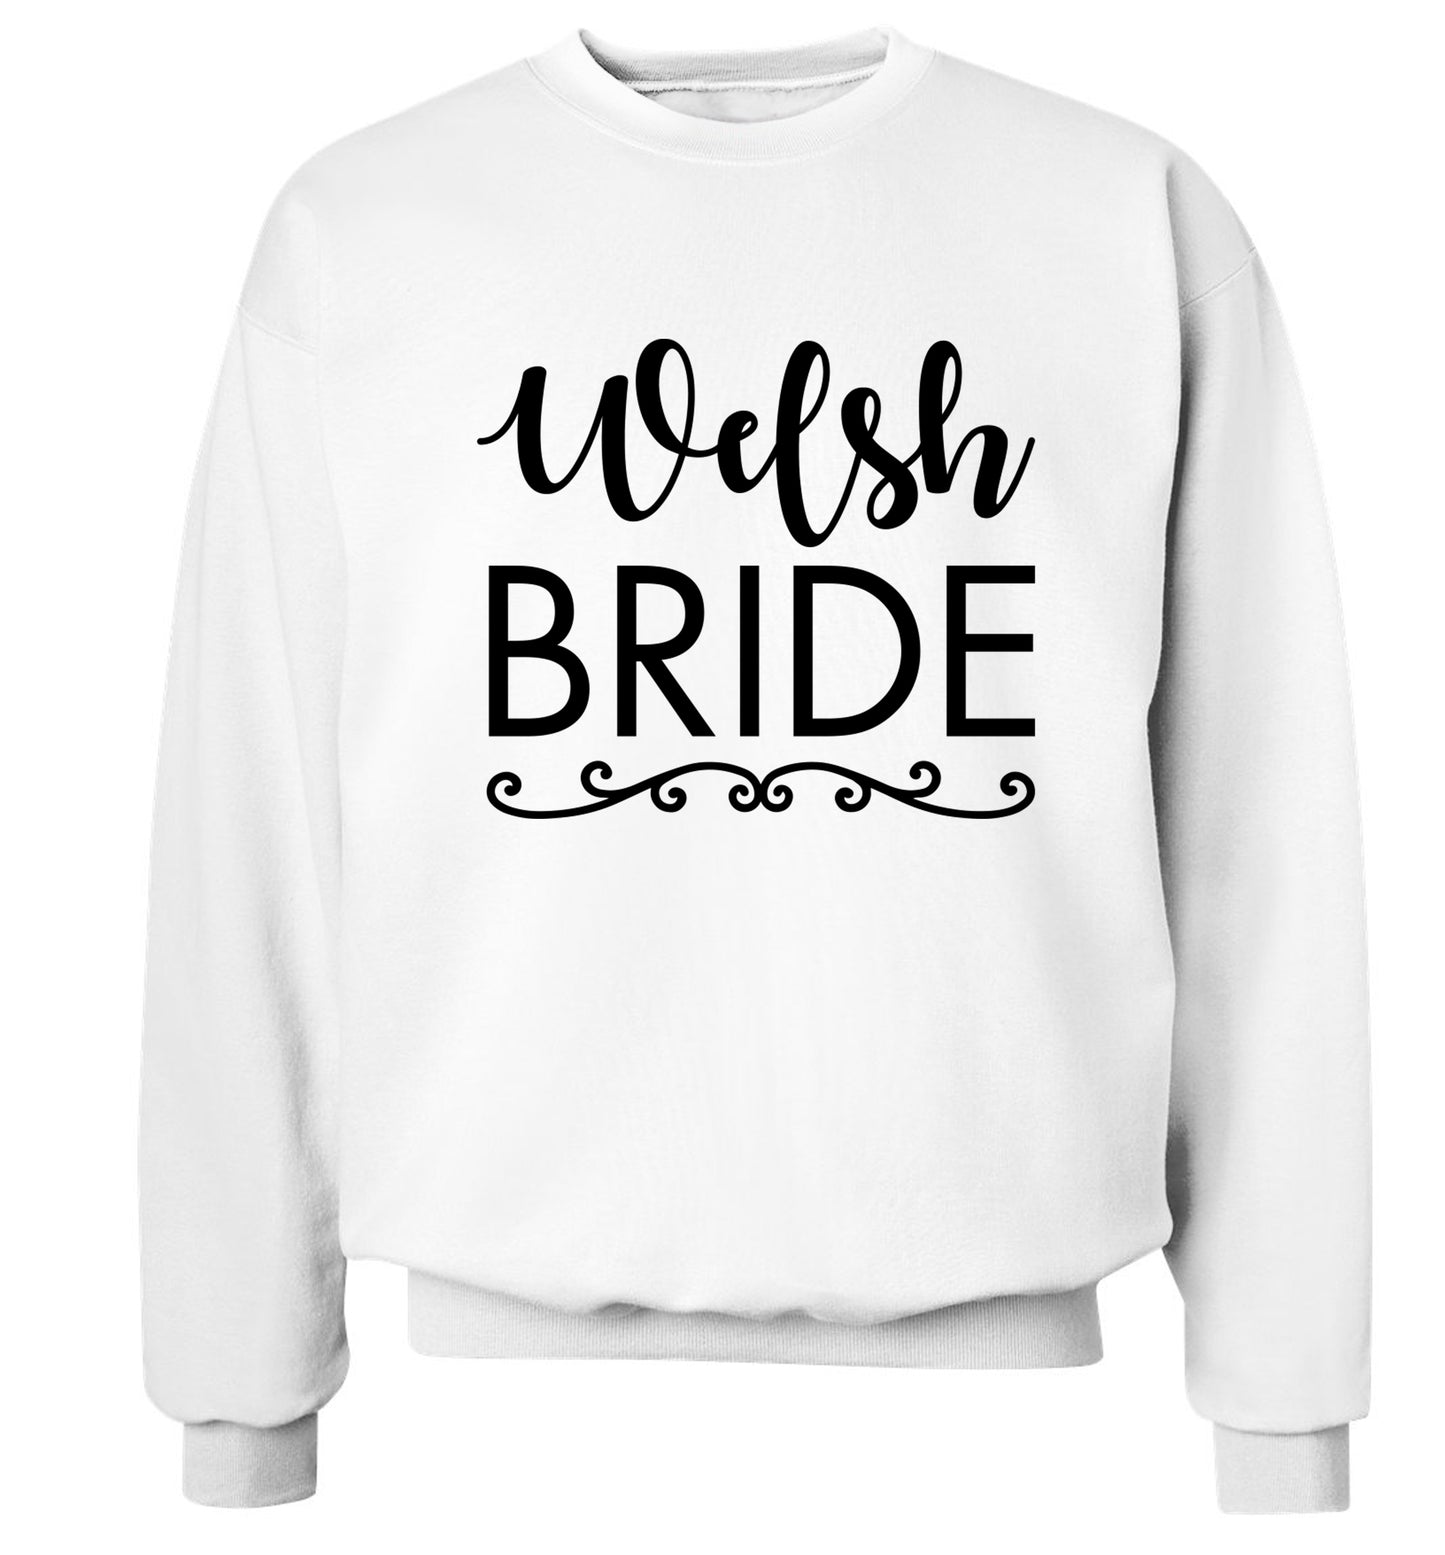 Welsh Bride Adult's unisex white Sweater 2XL